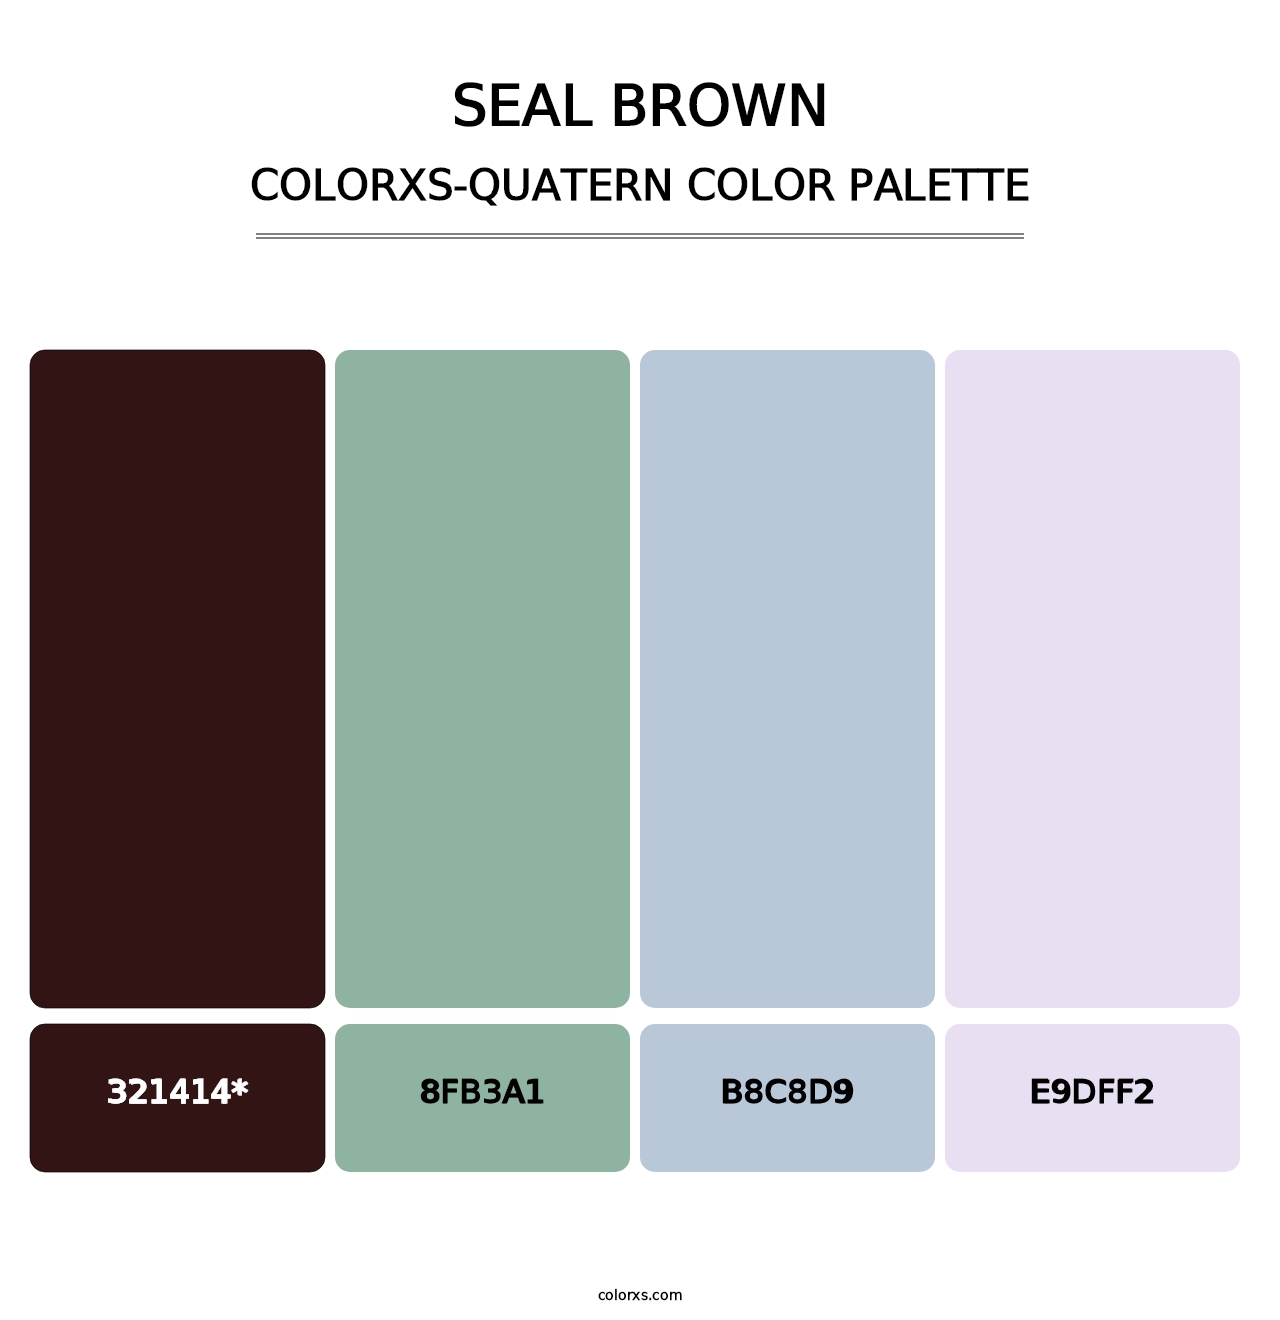 Seal brown - Colorxs Quatern Palette